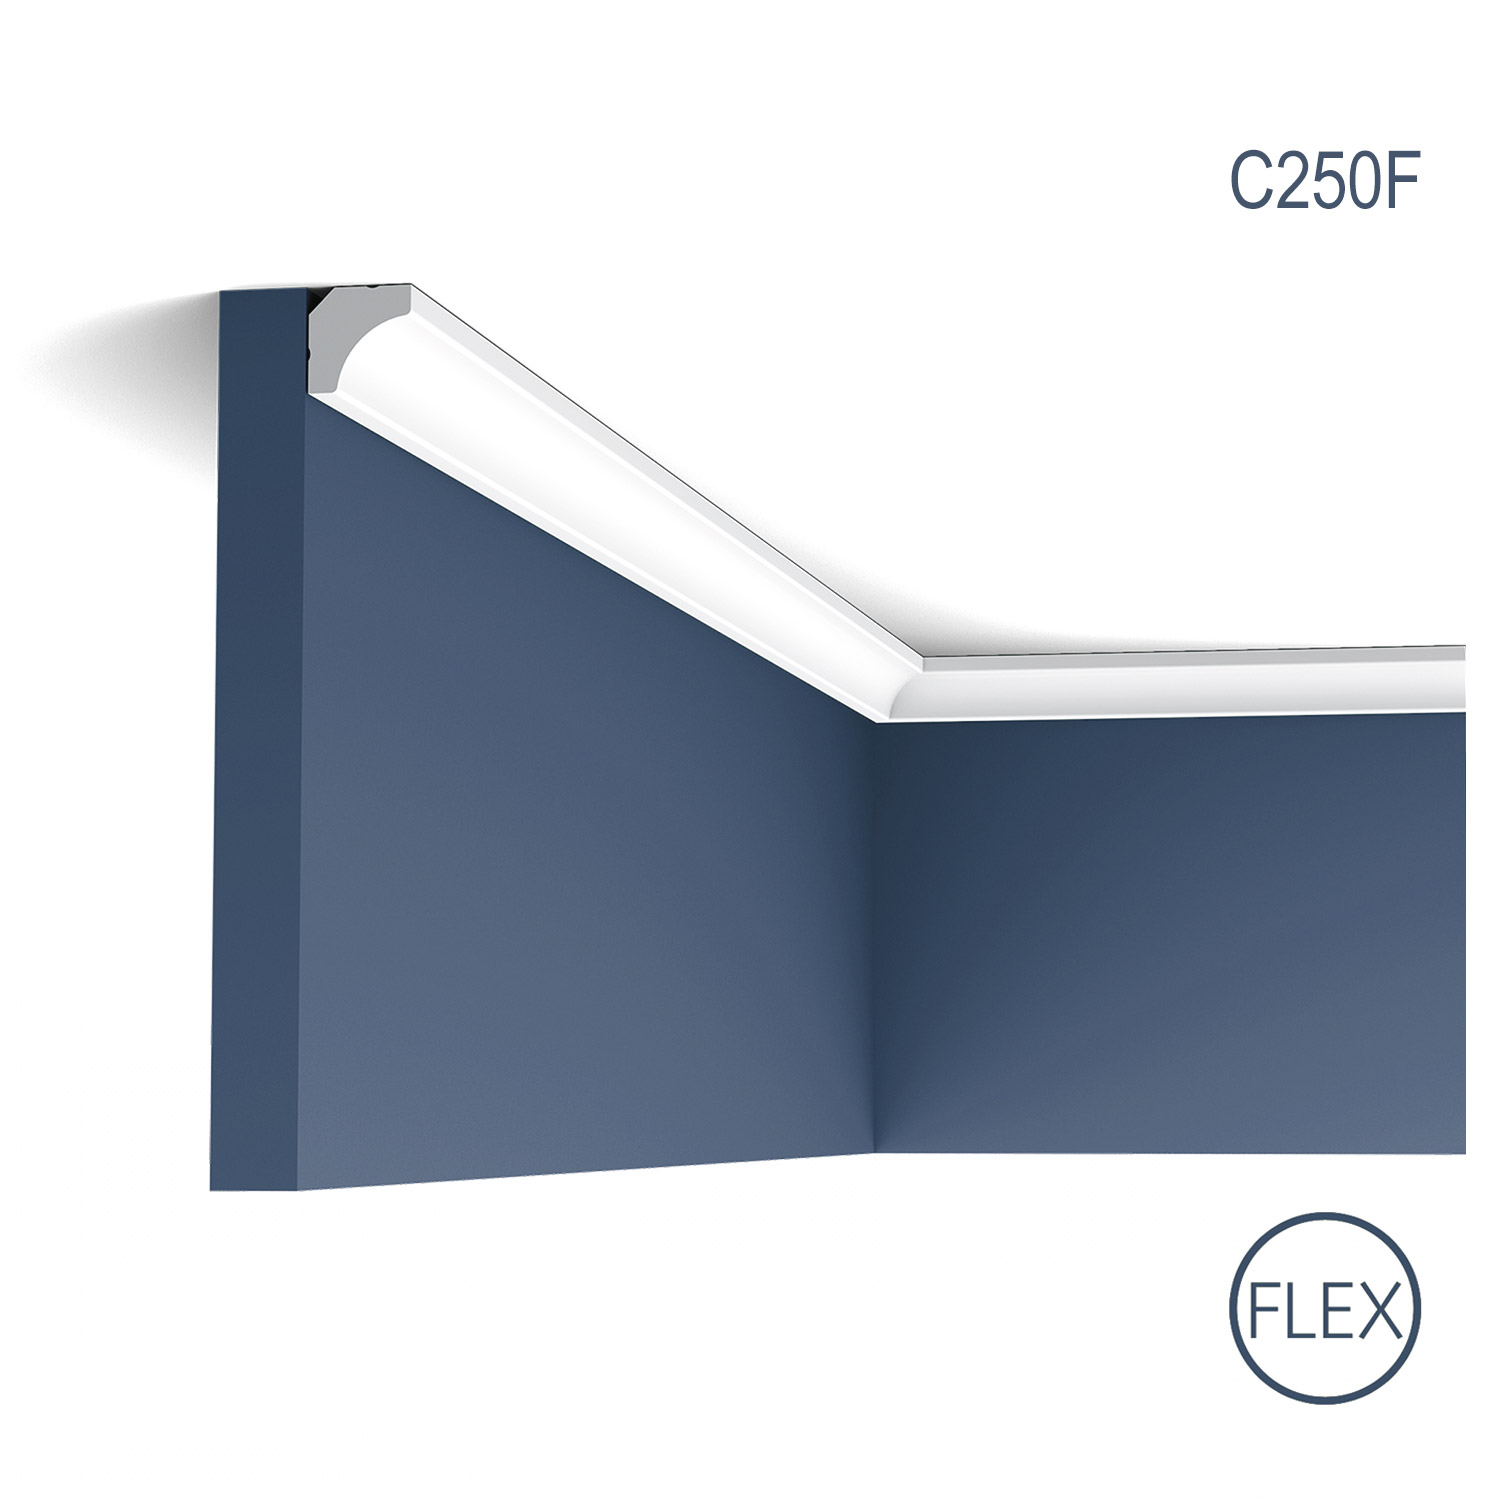 Cornisa Flex Luxxus C250F, Dimensiuni: 200 X 1.6 X 1.6 cm, Orac Decor